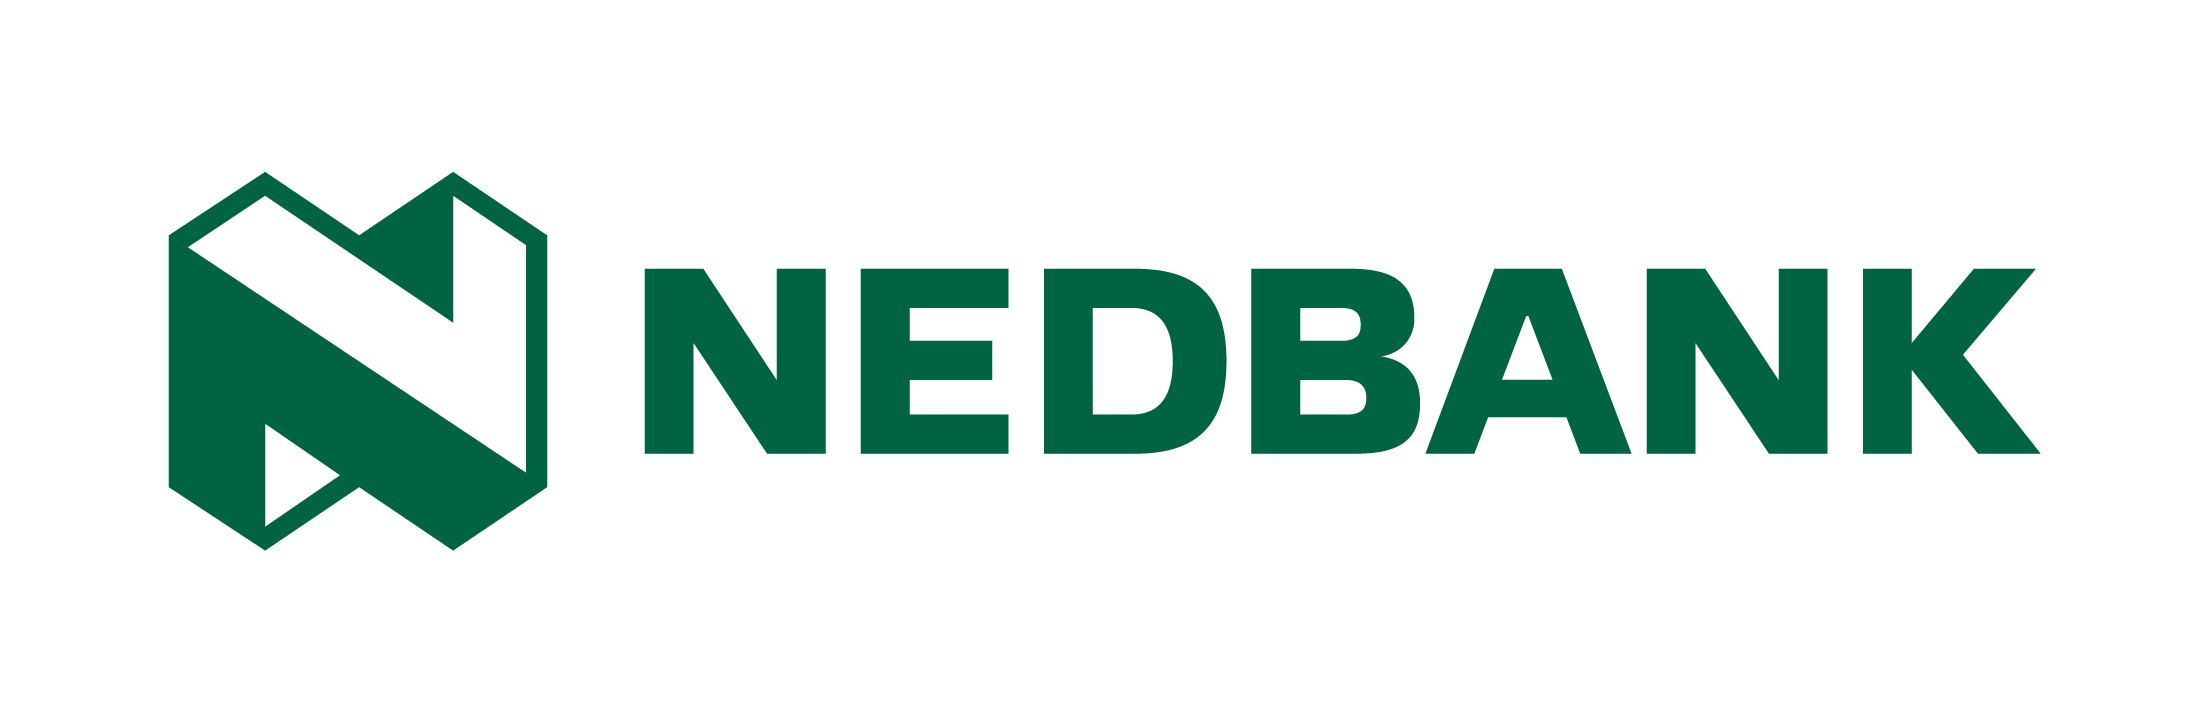 Ngc Nedbank Green Logo